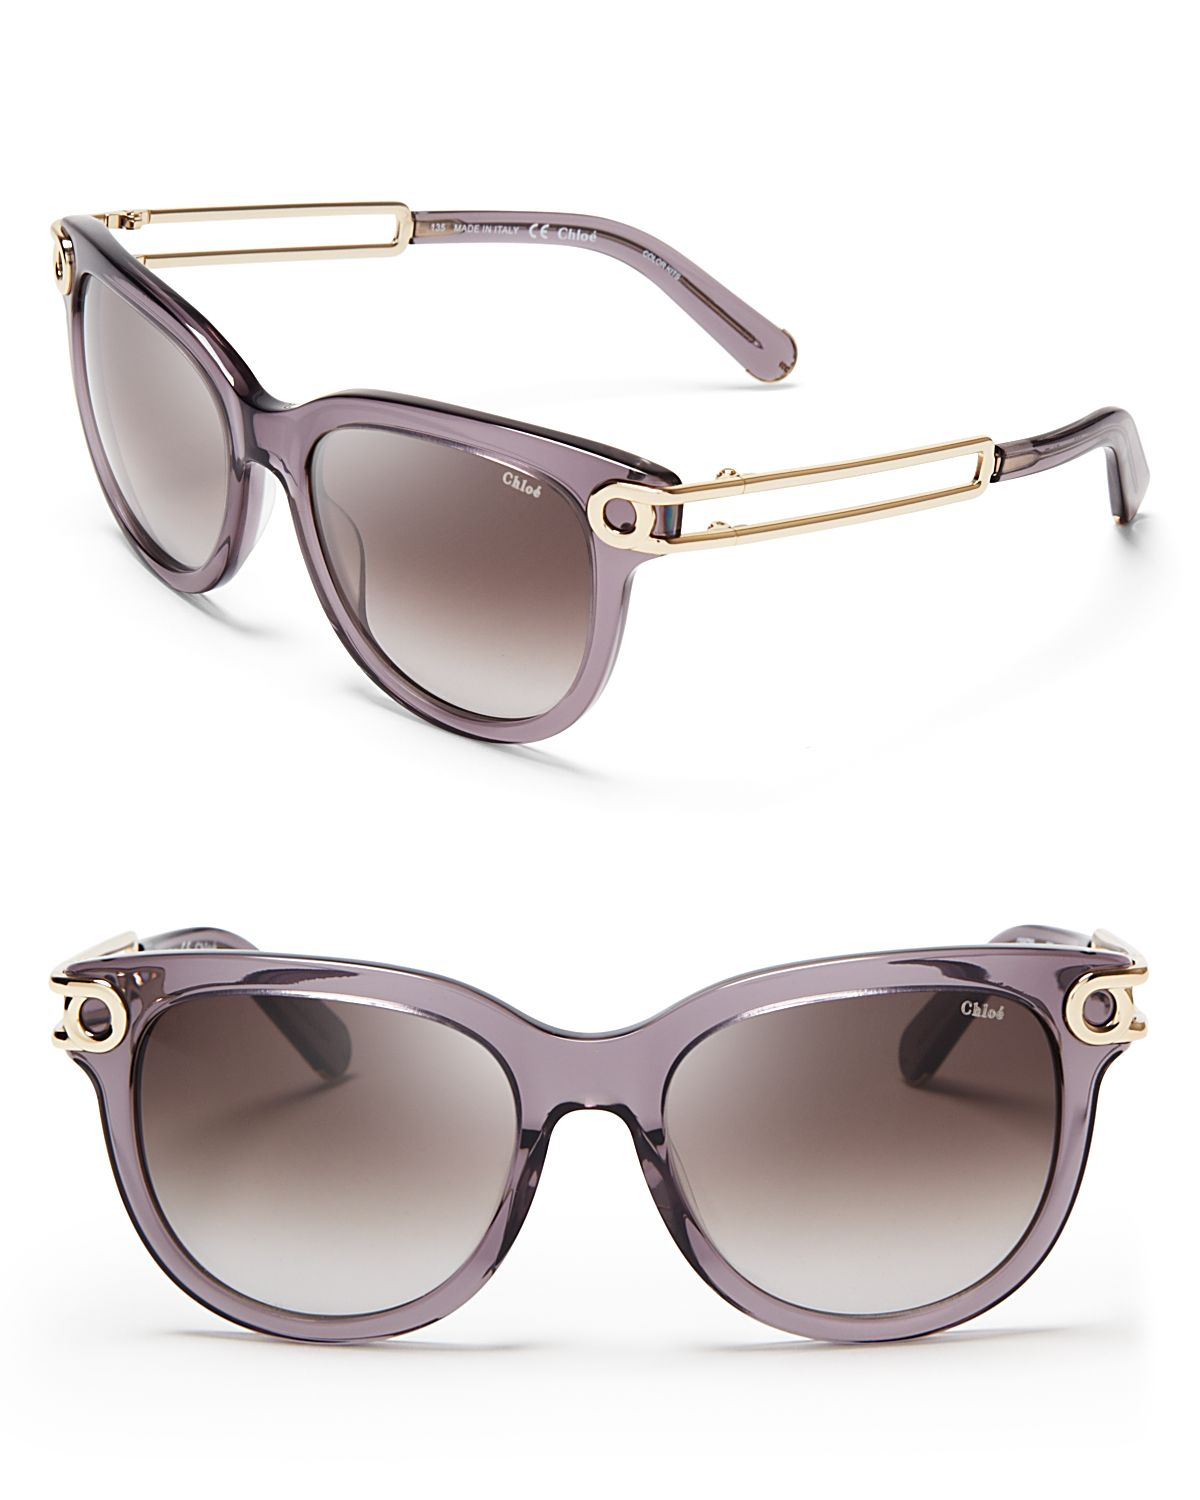 Lyst - Chloé Wayfarer Sunglasses - Bloomingdale's Exclusive in Gray